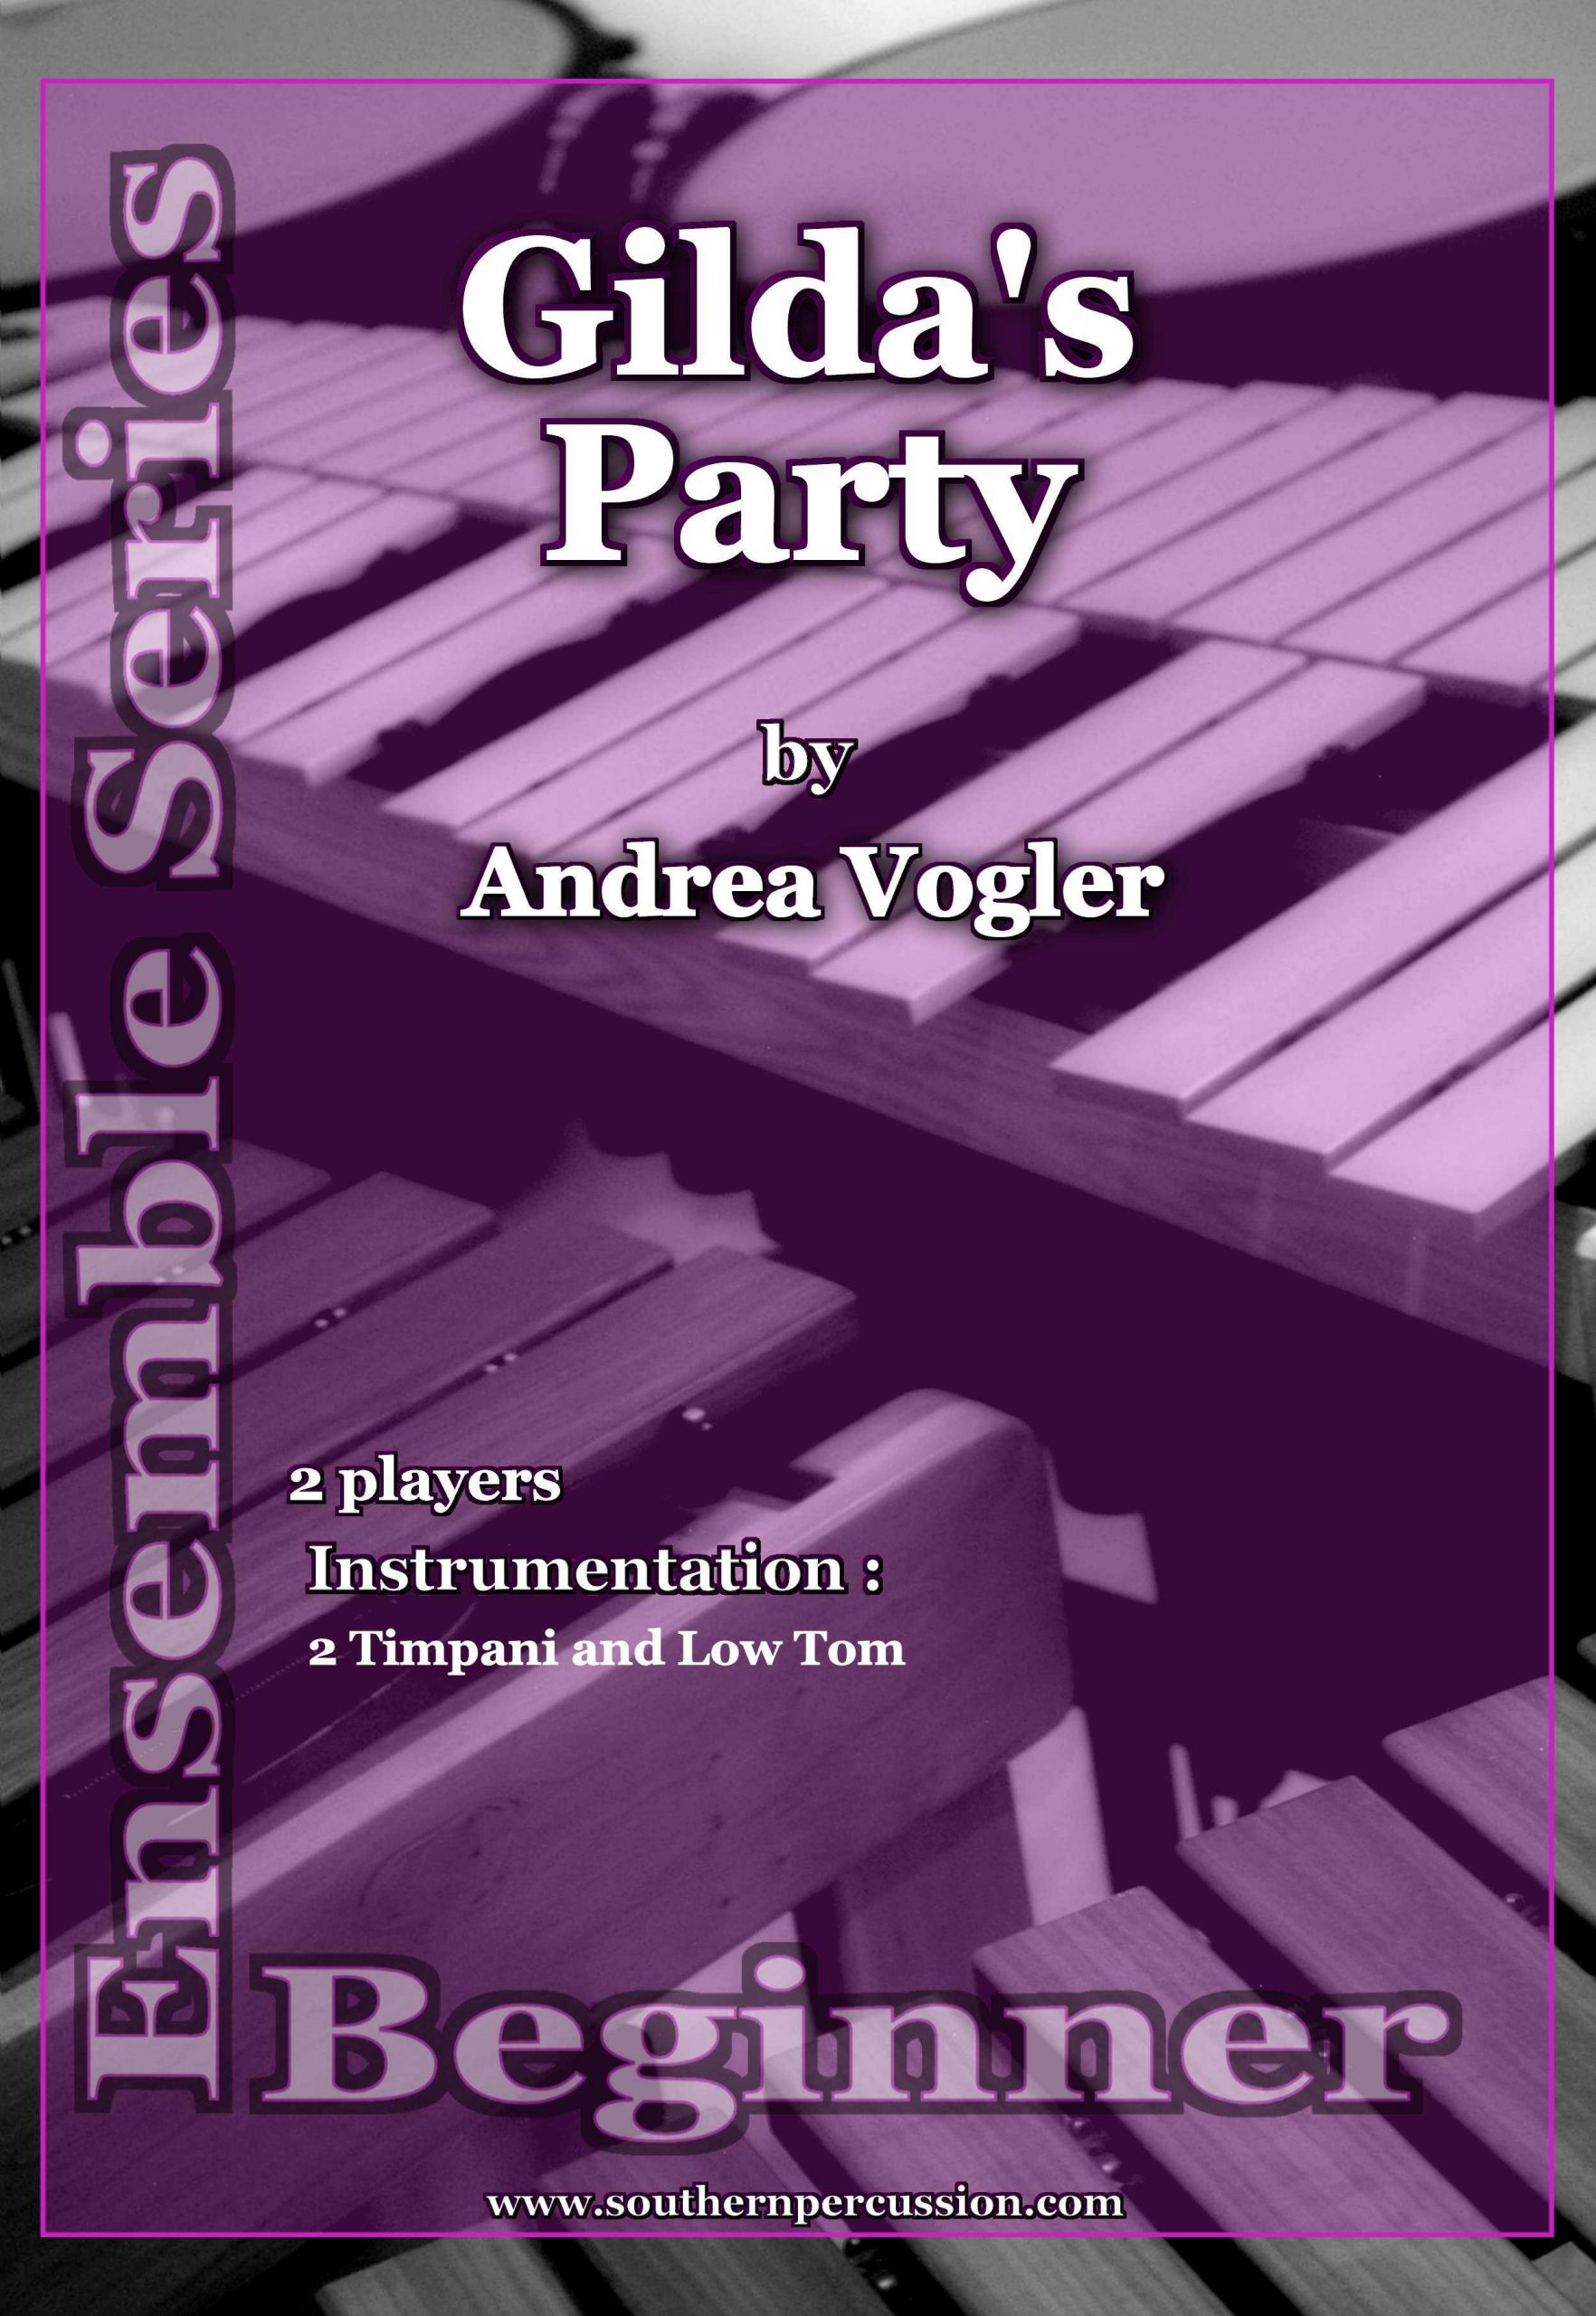 Gilda's Party by Andrea Vogler